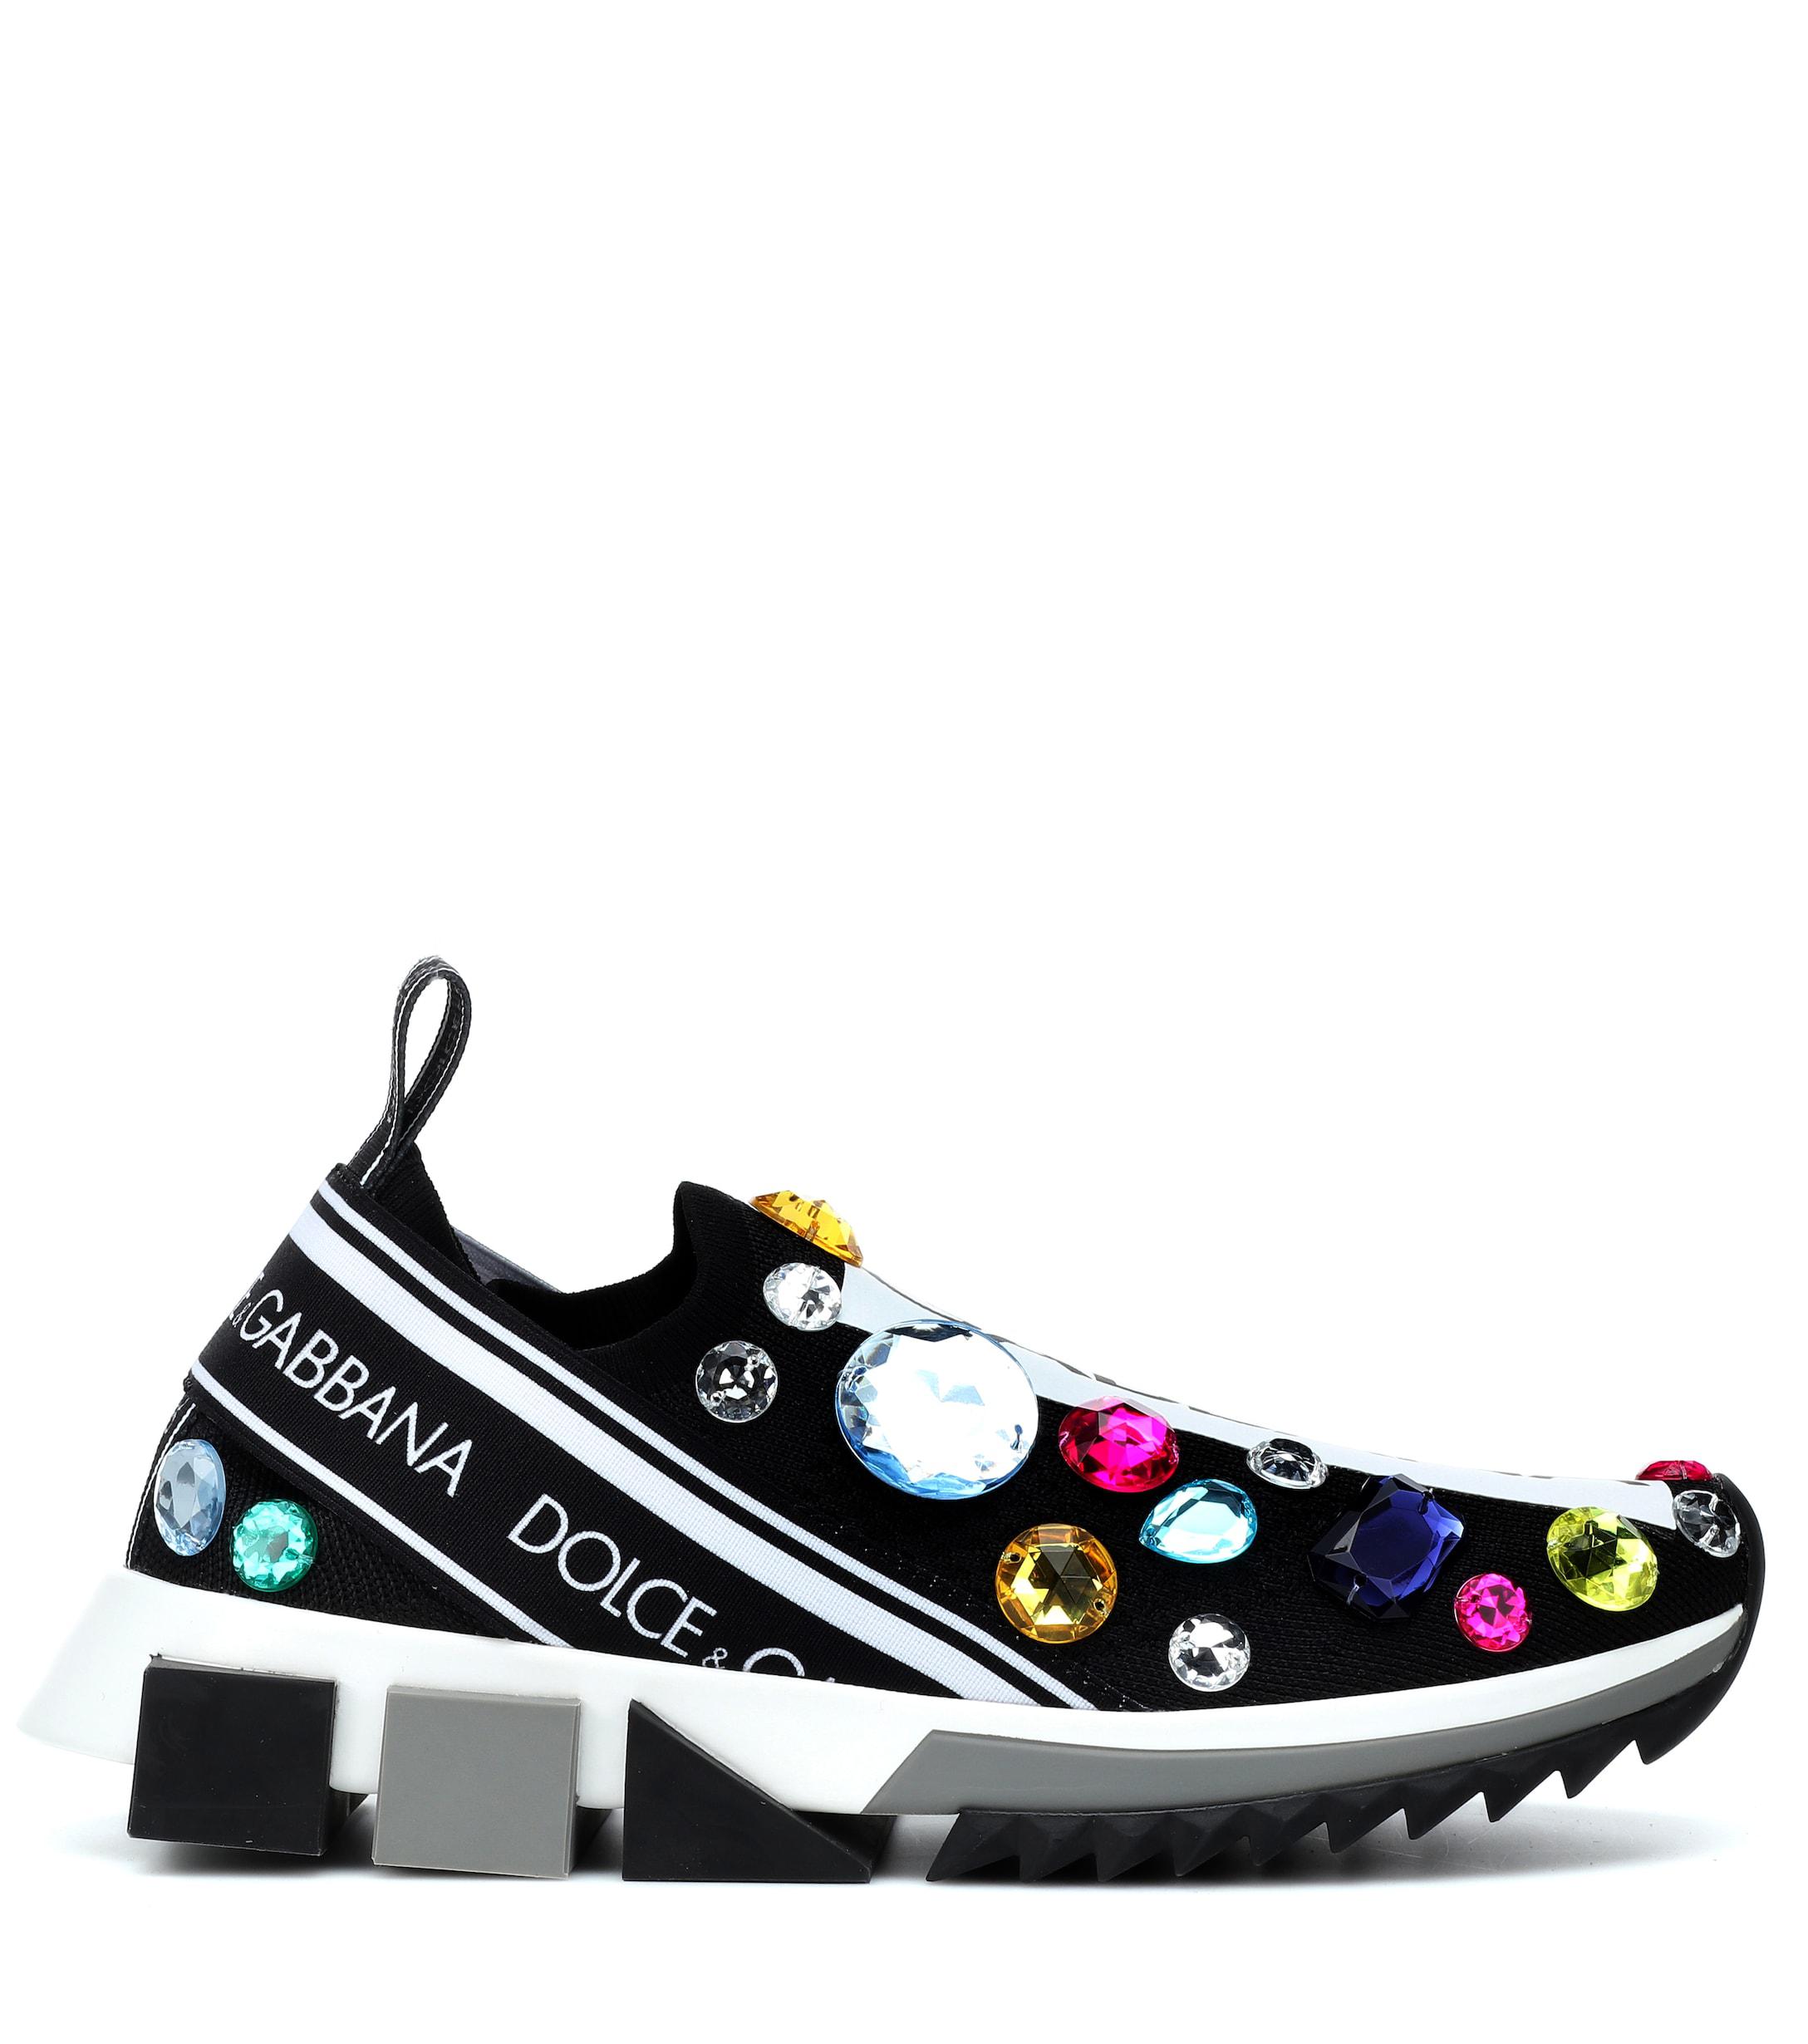 Dolce & Gabbana Sorrento Embellished Sneakers in Black - Lyst